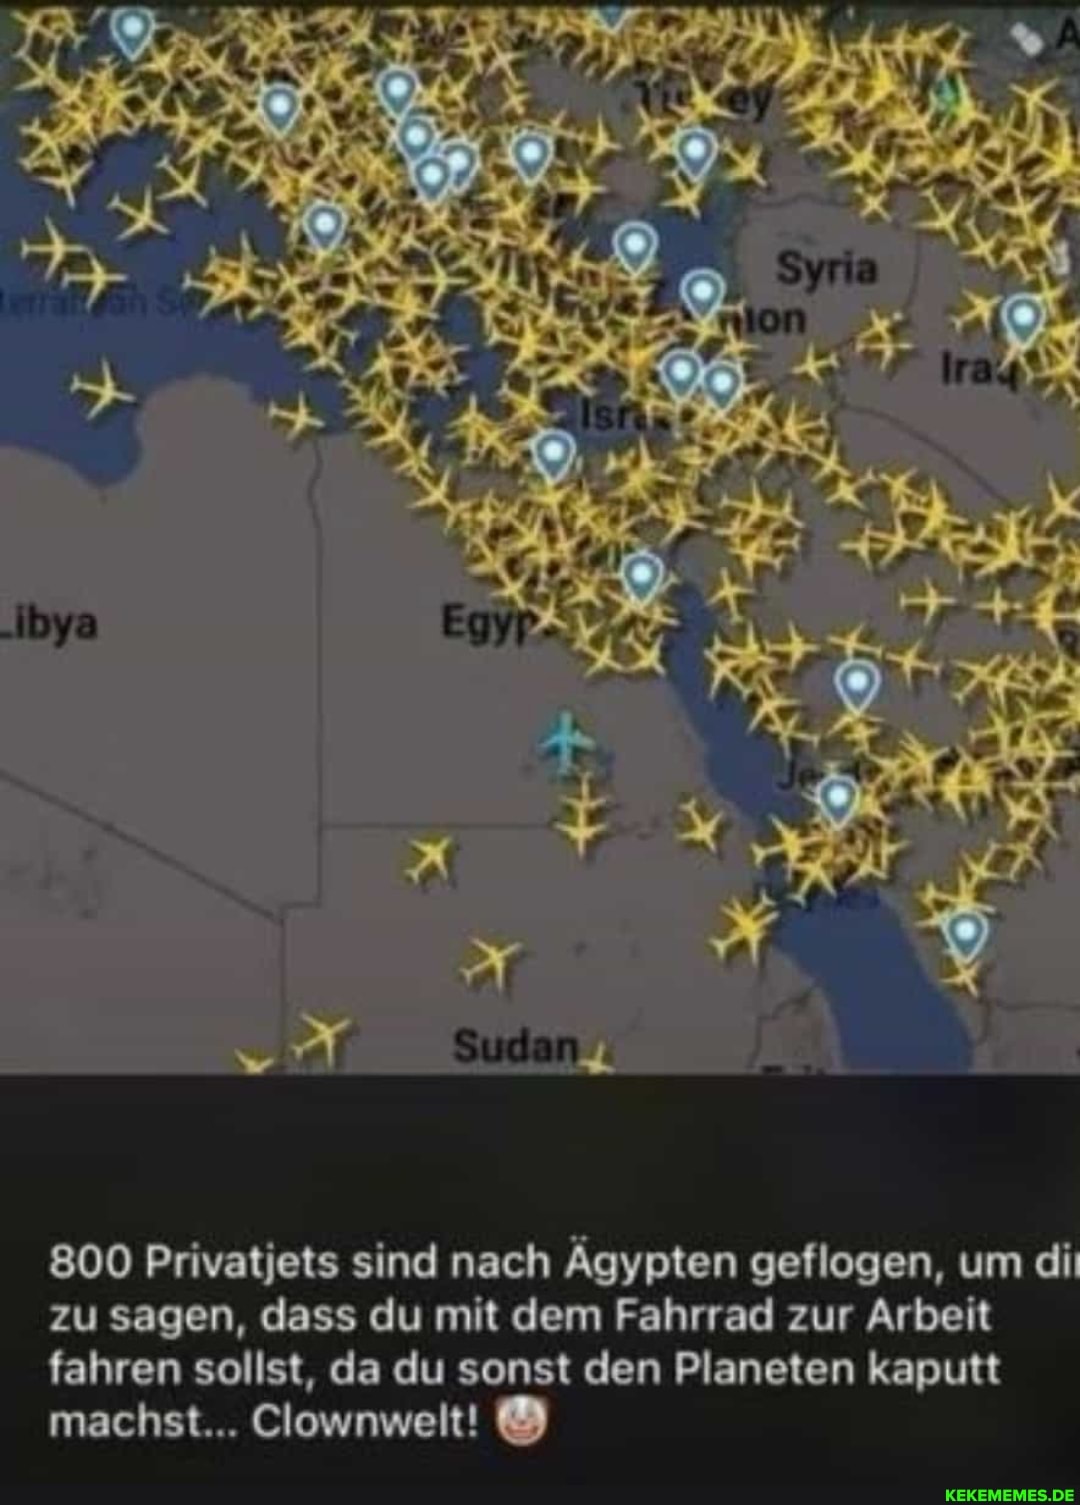 800 Privatjets sind nach Agypten geflogen, um di fahren solist, da du sonst den 